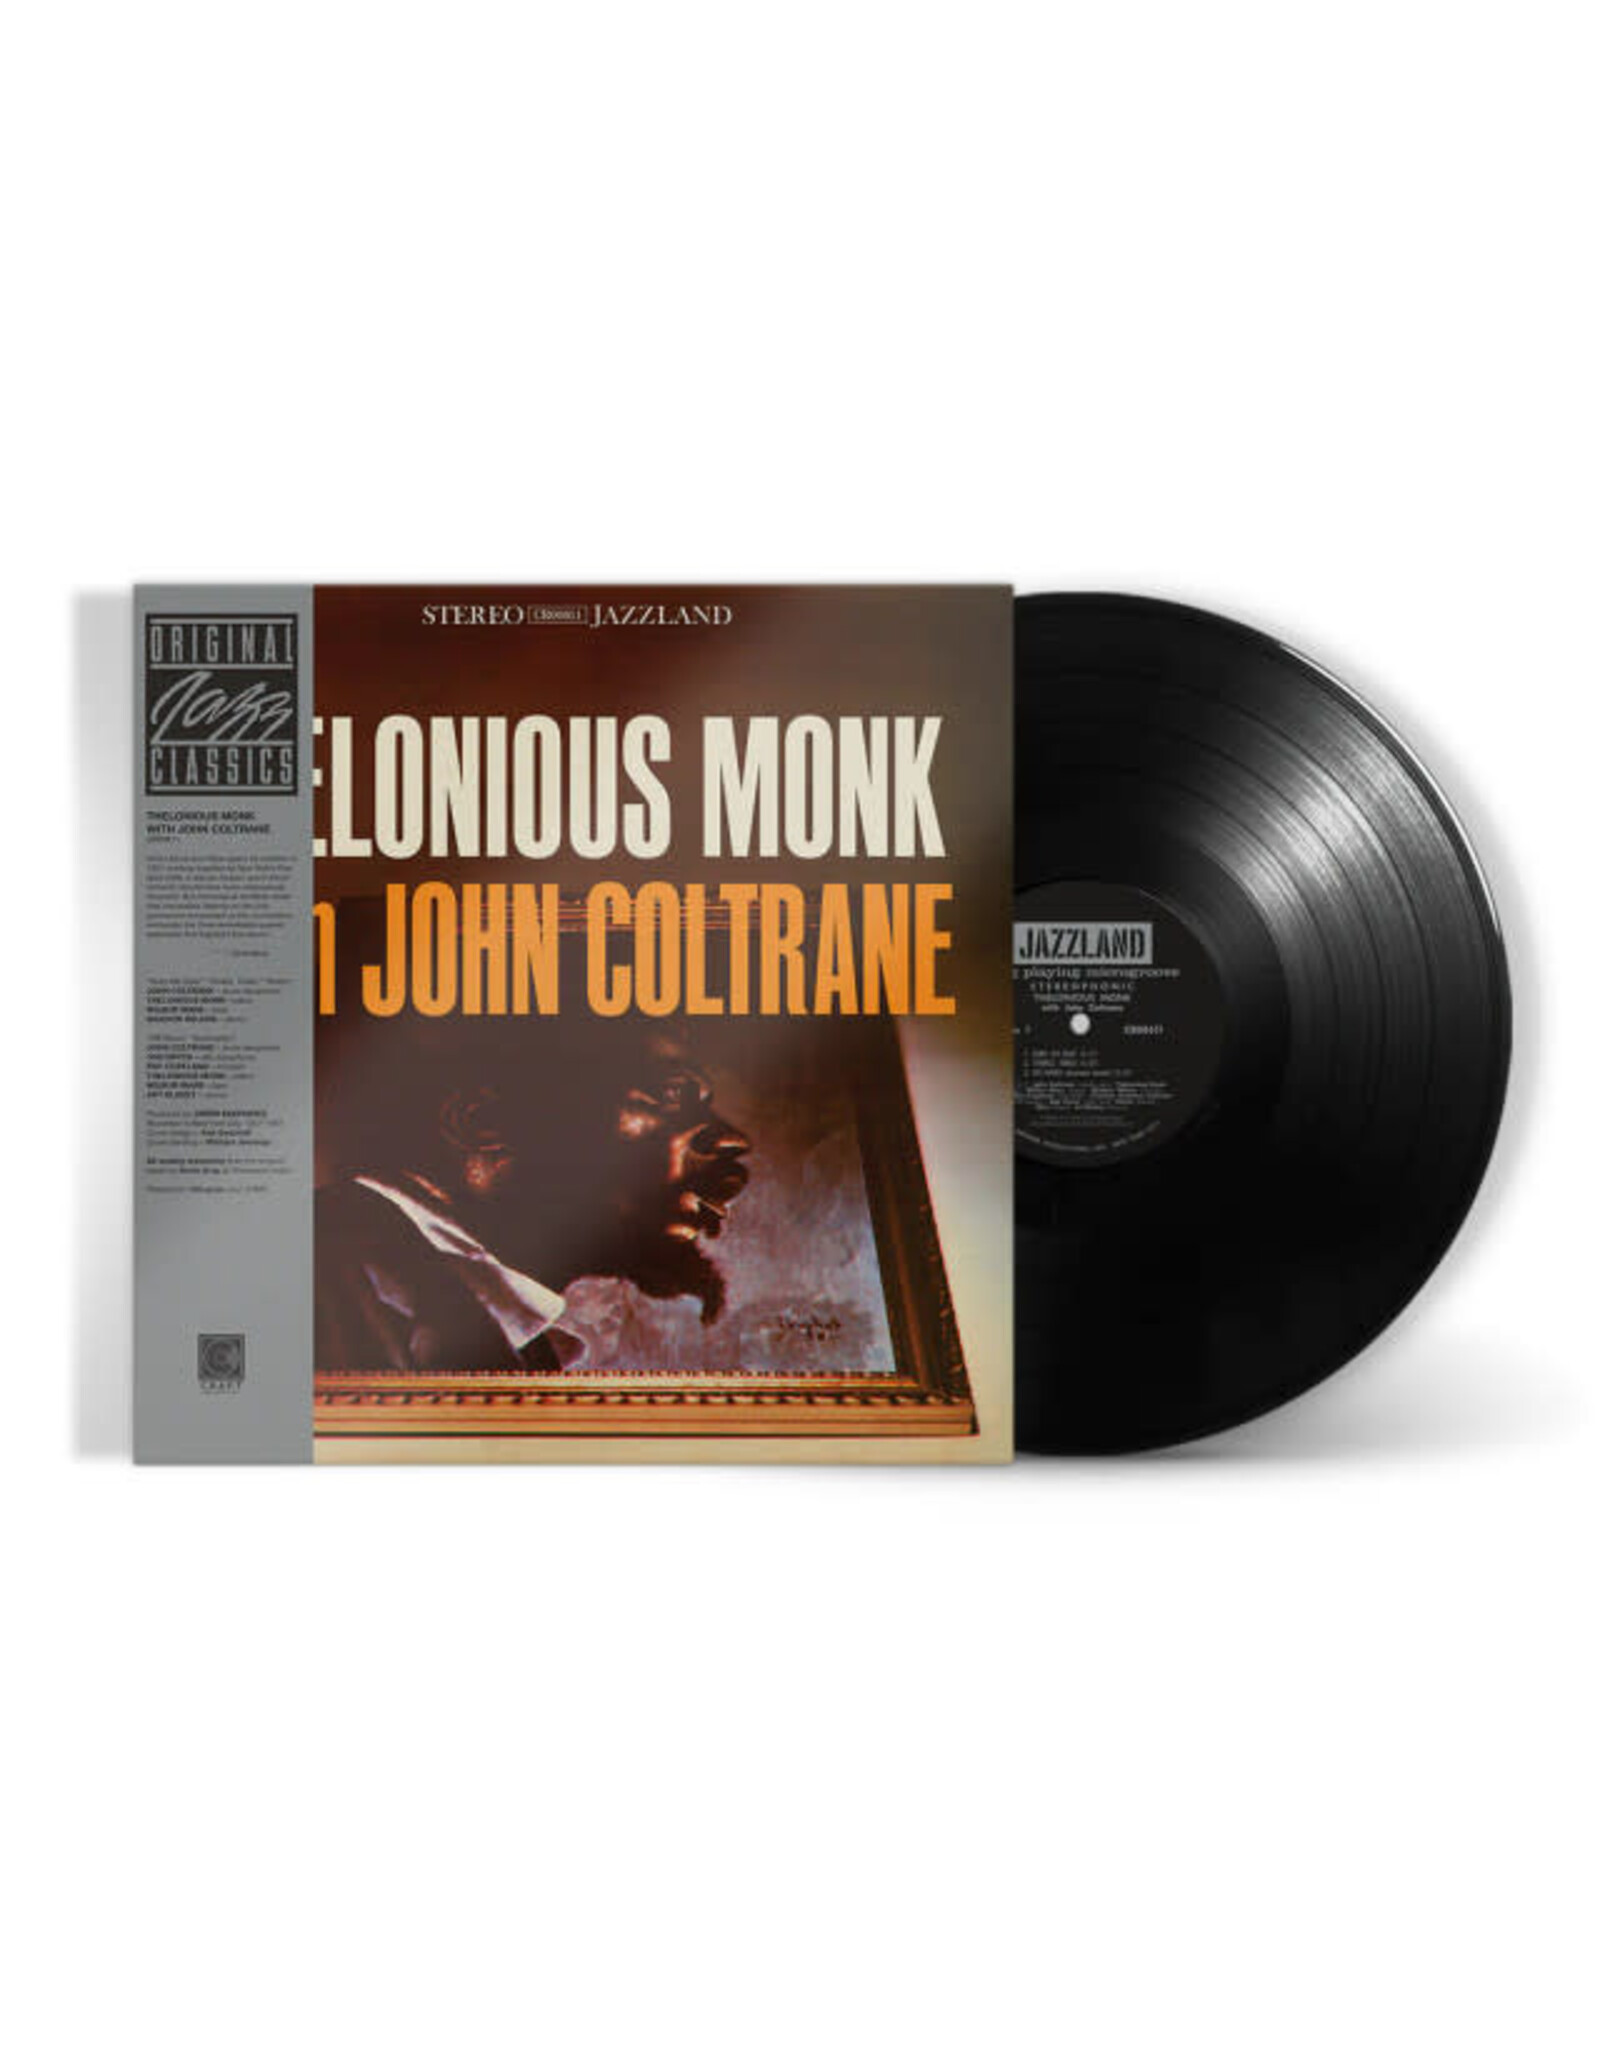 Craft Monk, Thelonious & John Coltrane: Thelonious Monk With John Coltrane (Original Jazz Classics) LP